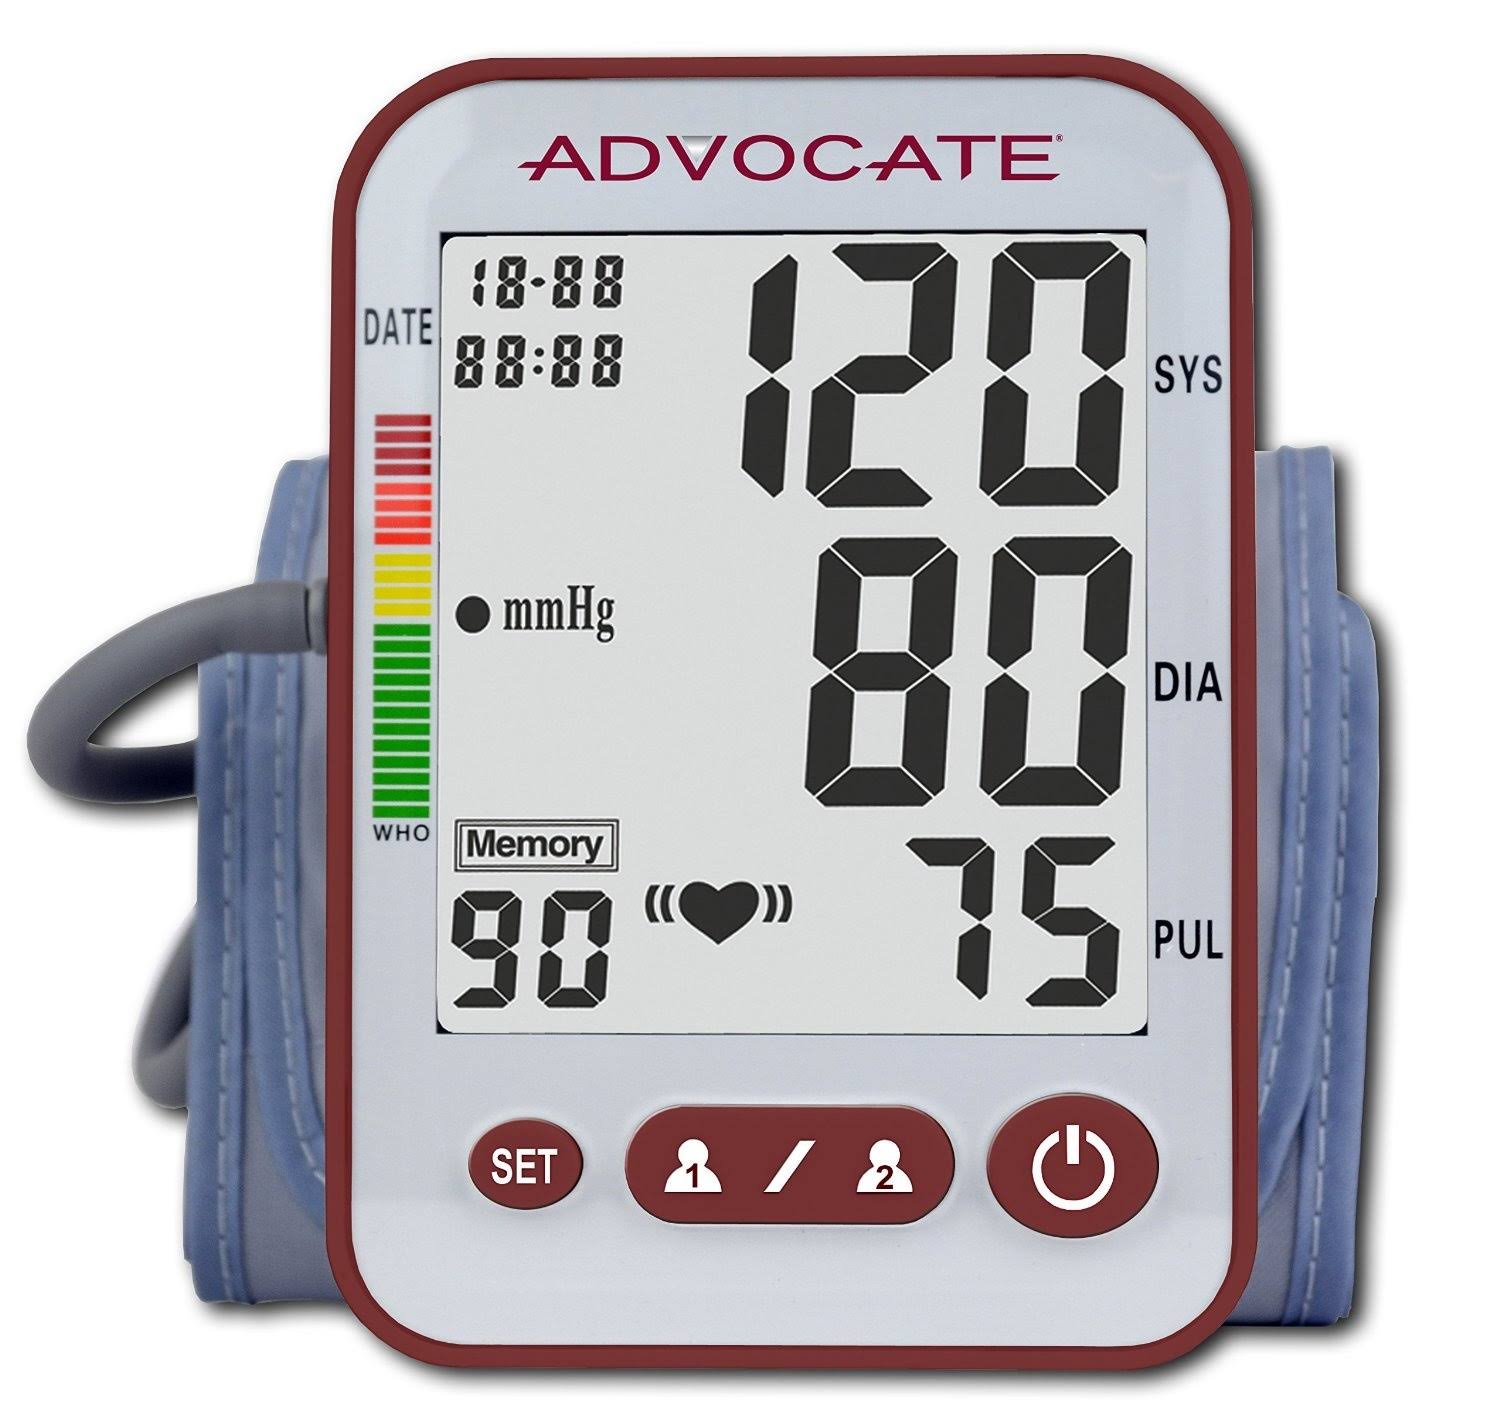 Advocate Upper Arm Blood Pressure Monitor - X-Large